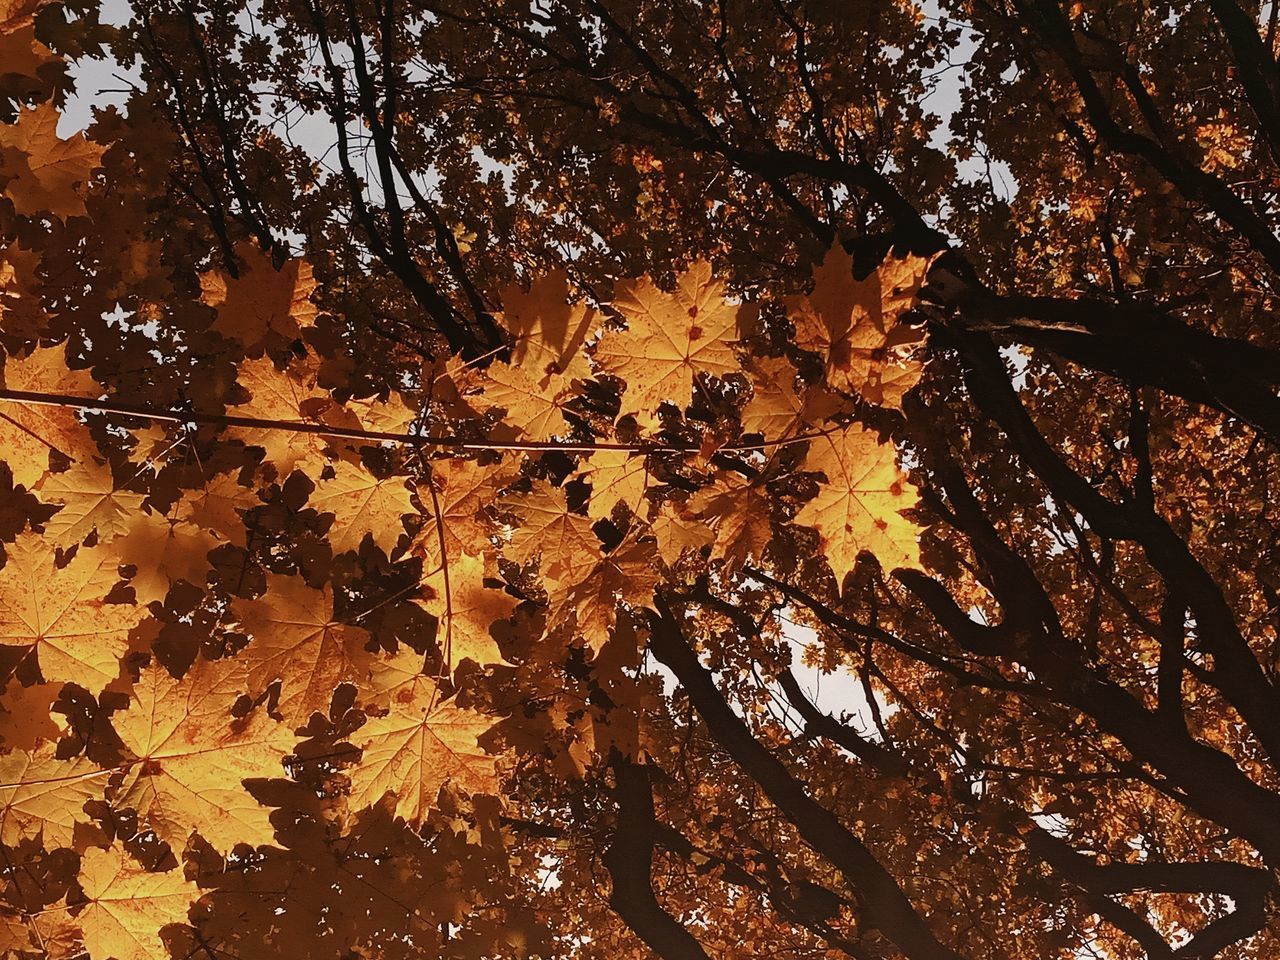 October #day #Nature  #EyeEm #landscape #nature #photography #photography #forest #tree #beautiful # #autumn #leaves #leaf #orange  #Background #sunlight